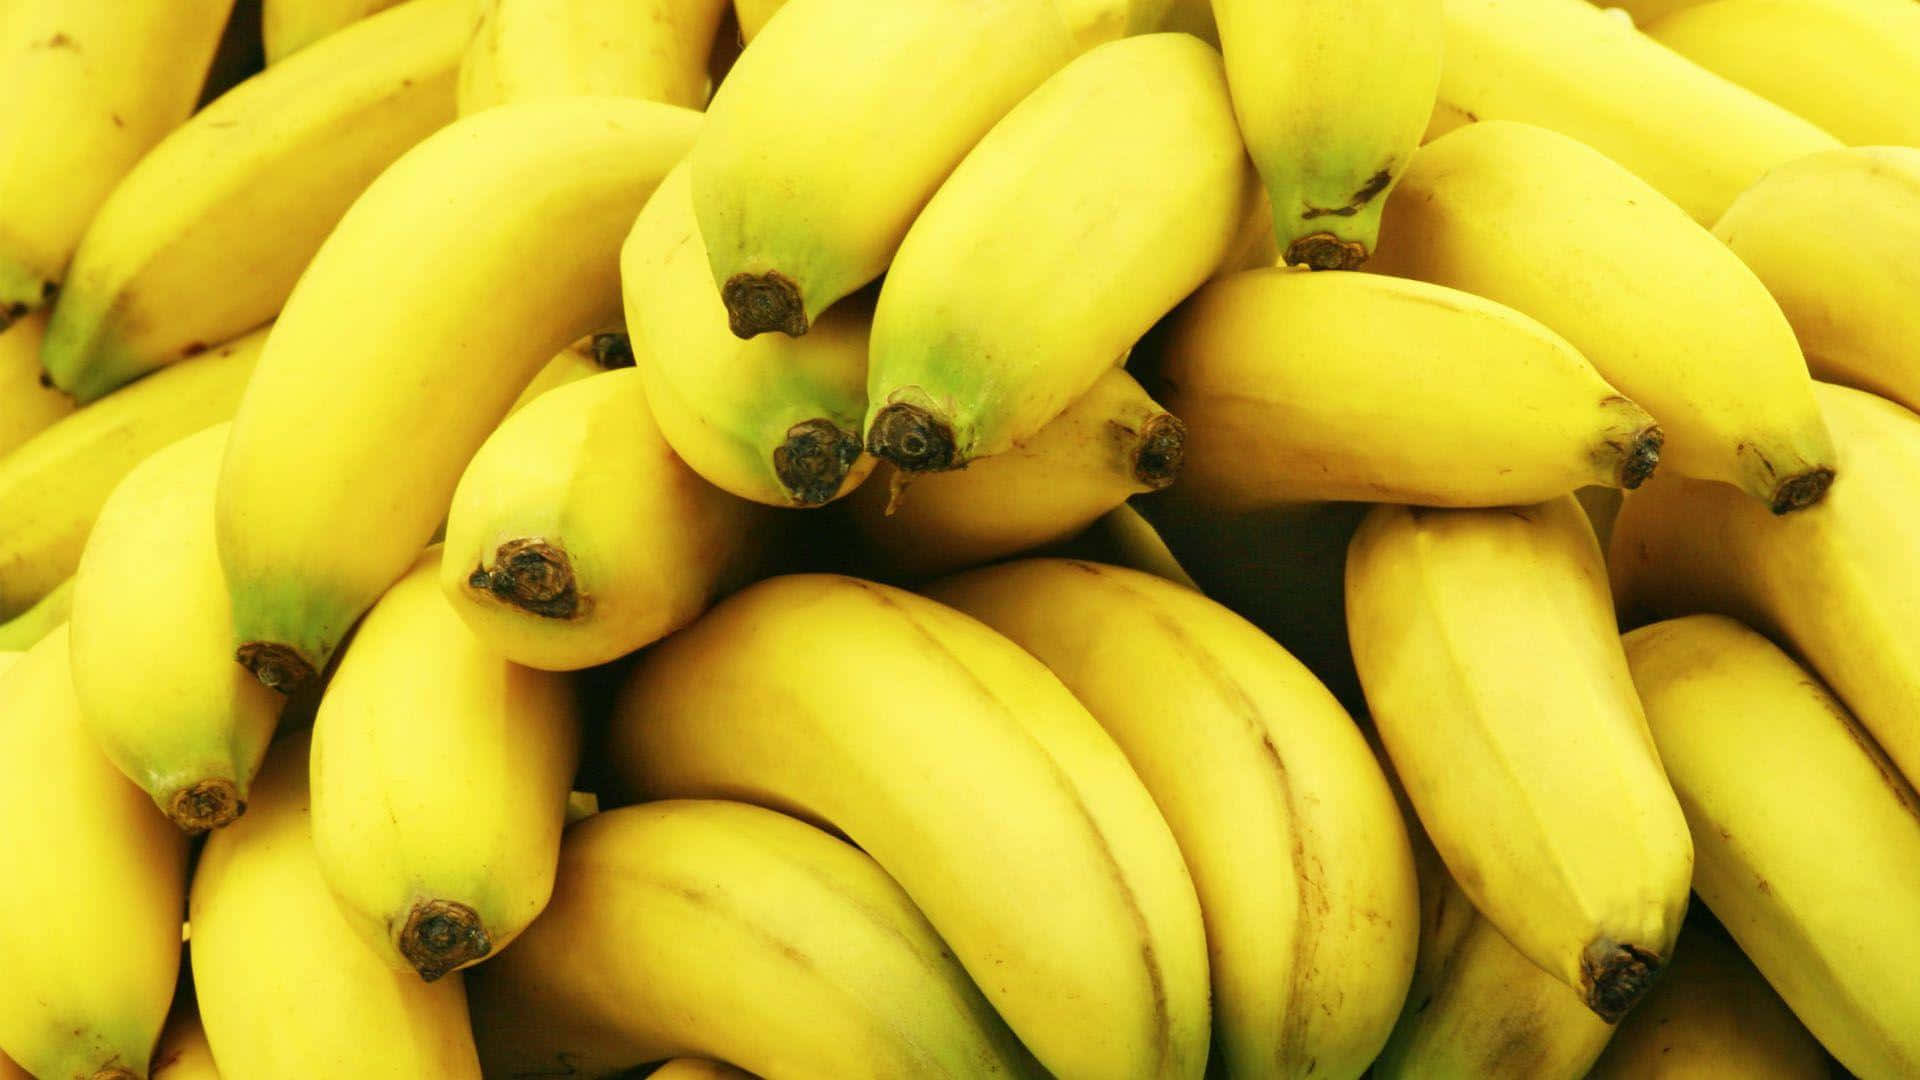 Enjoy a yellow, nutrient-filled banana!